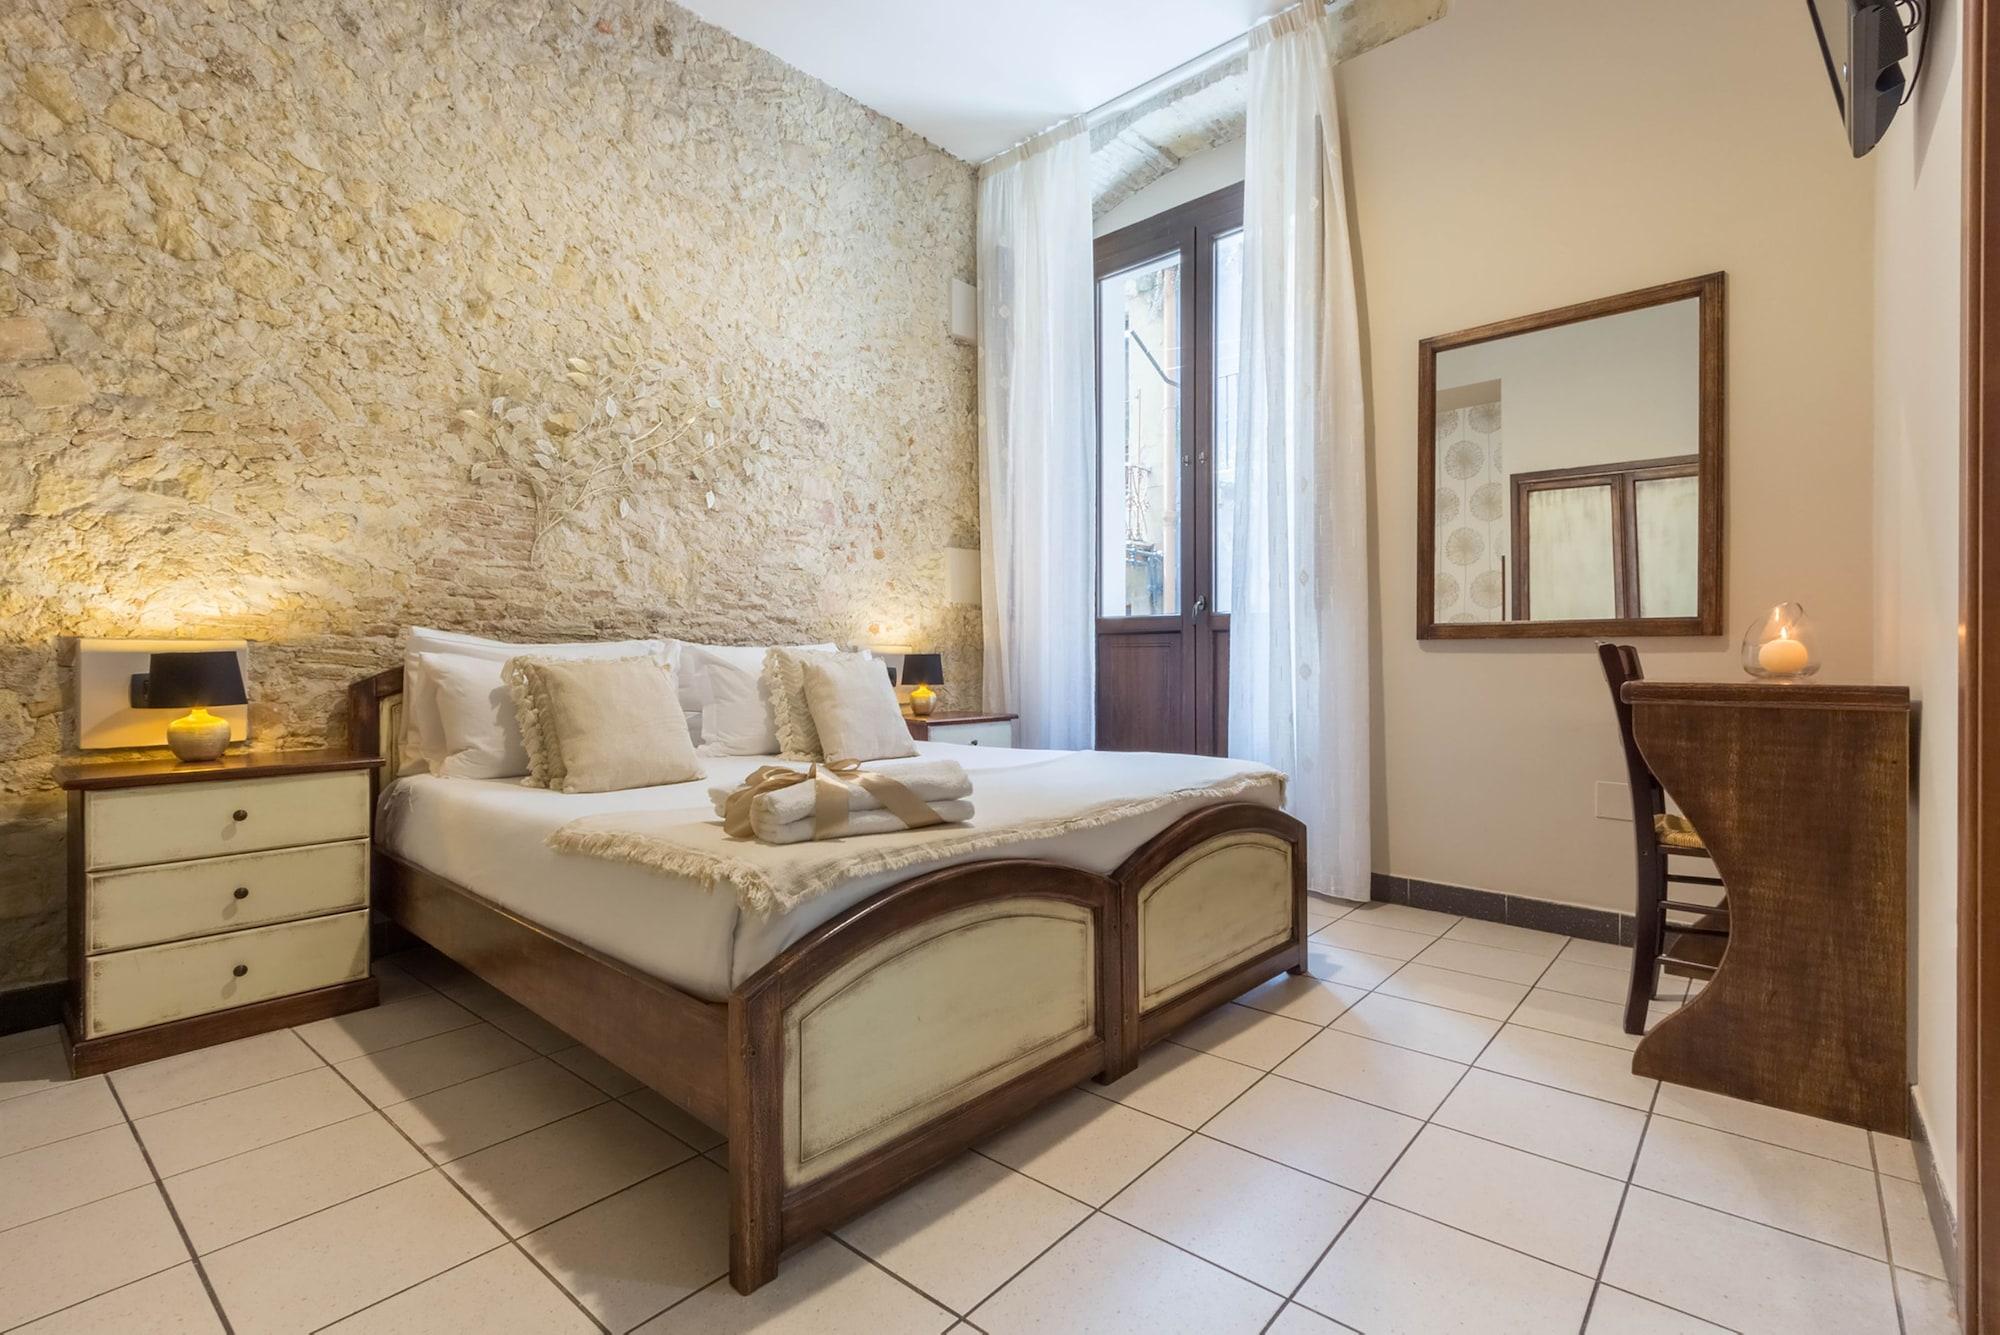 Arcobaleno Rooms Cagliari Exterior foto